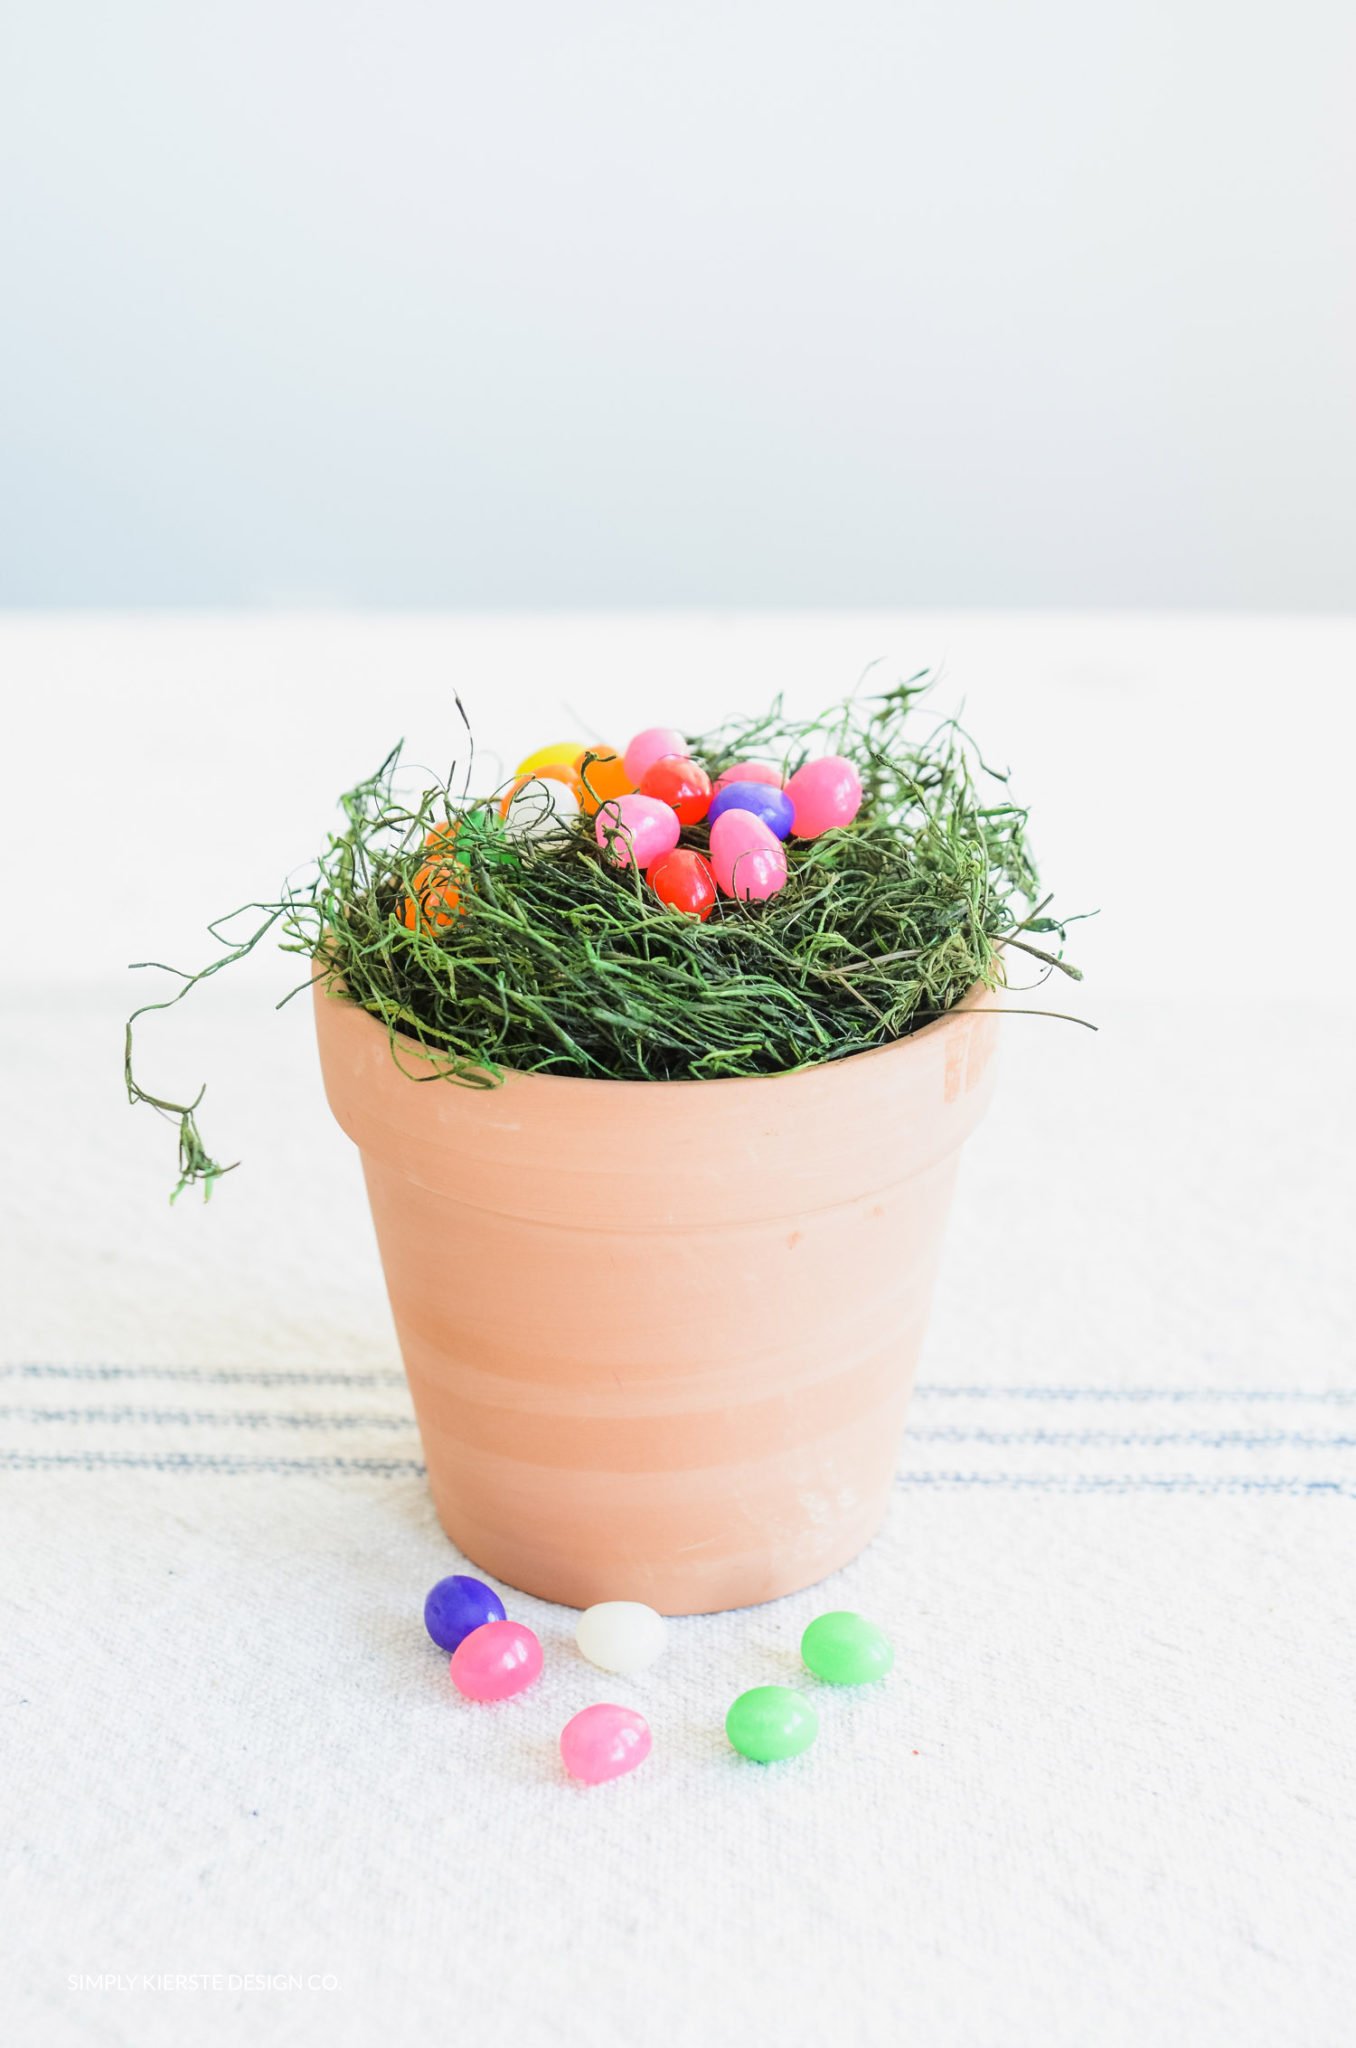 Magic Jelly Beans & Lollipop Garden | Easter Tradition | oldsaltfarm.com #eastertradition #jellybeans #easterideas #easterforkids